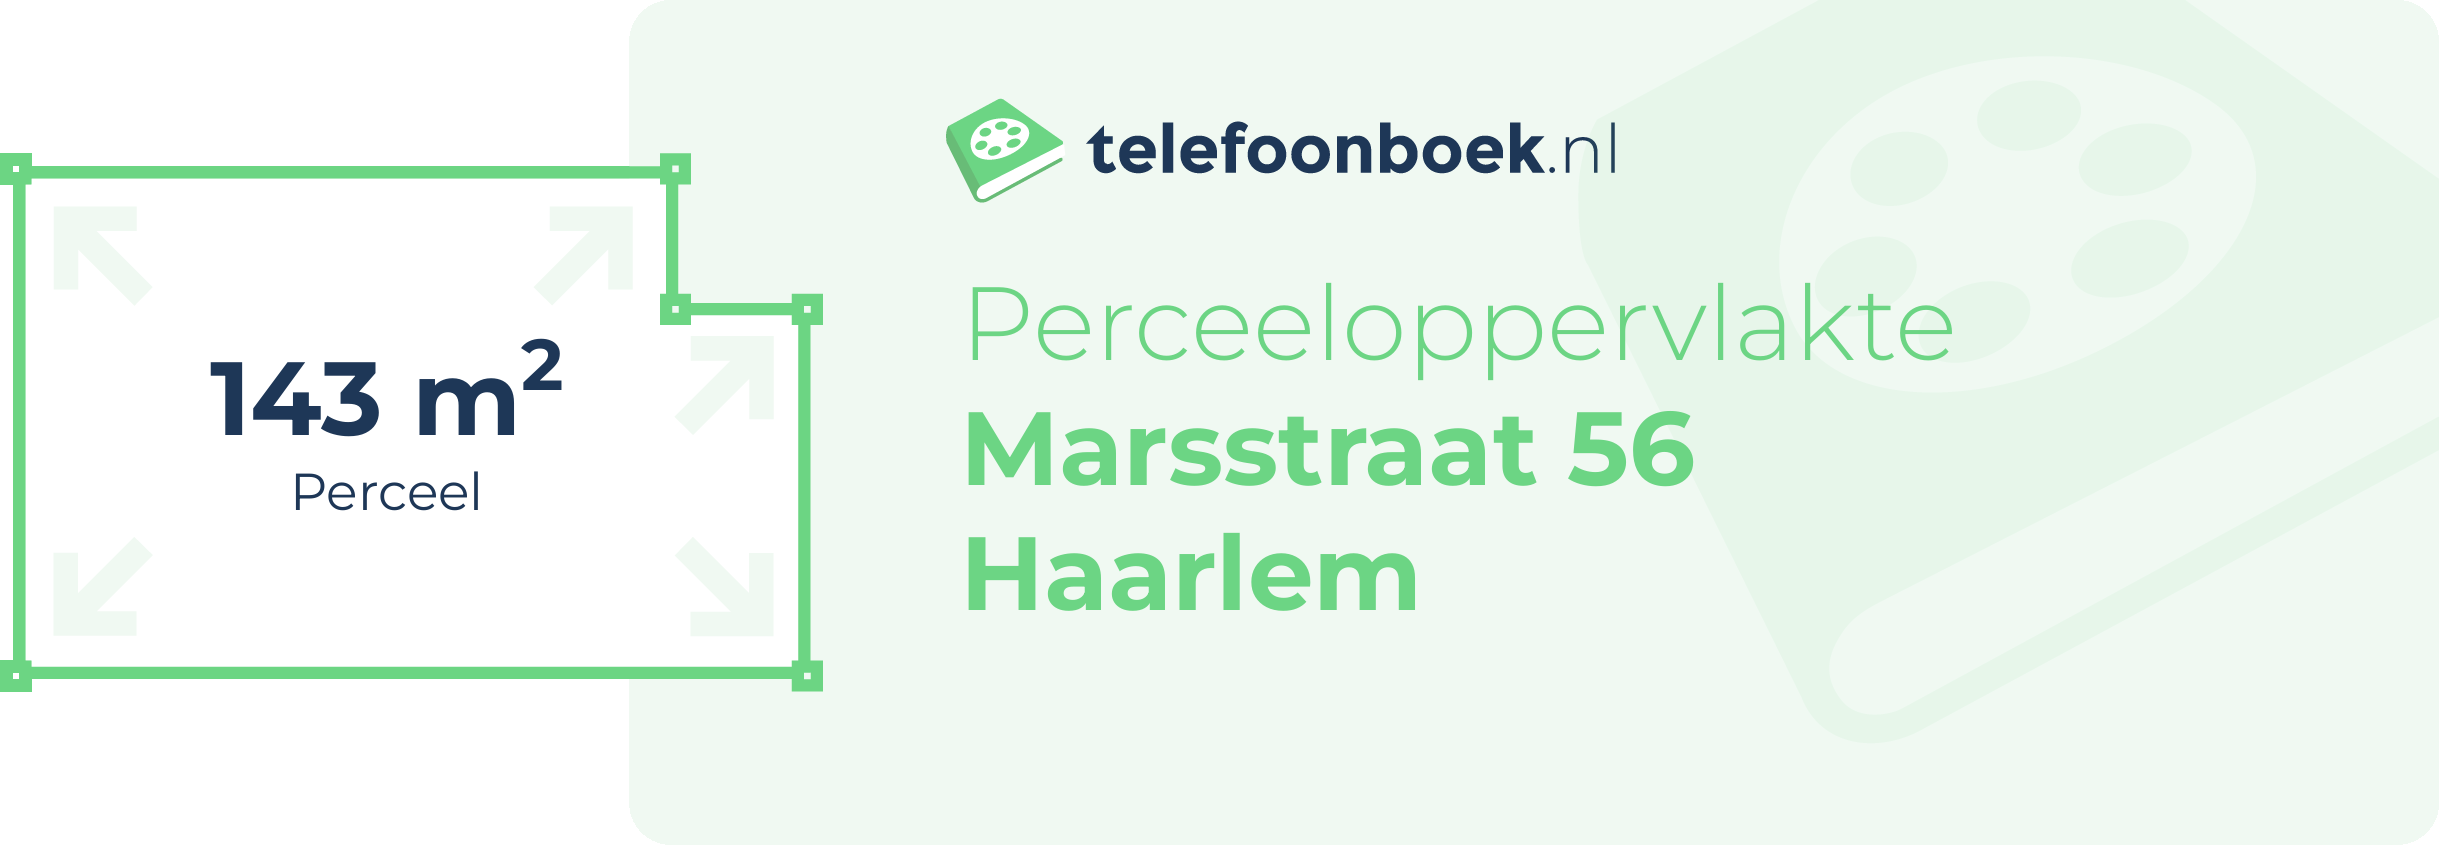 Perceeloppervlakte Marsstraat 56 Haarlem